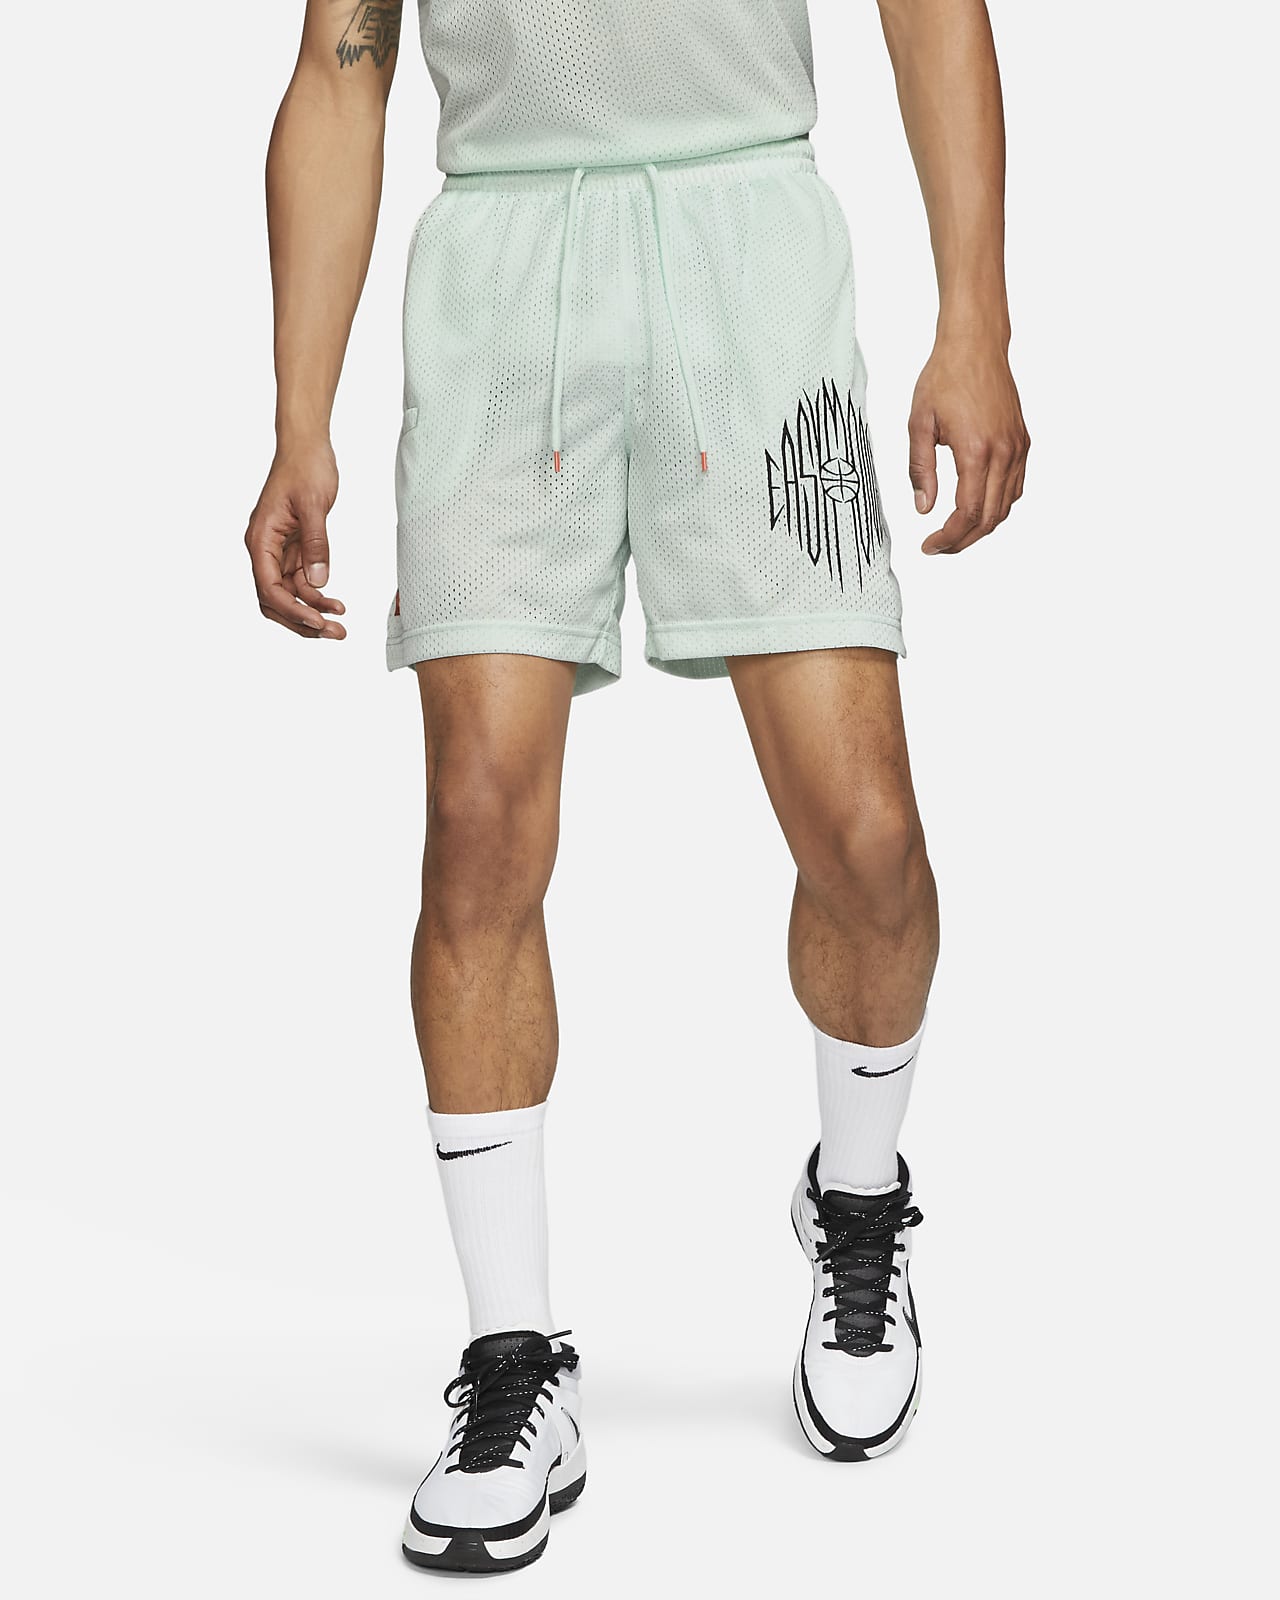 KD Men's Basketball Shorts. Nike SI